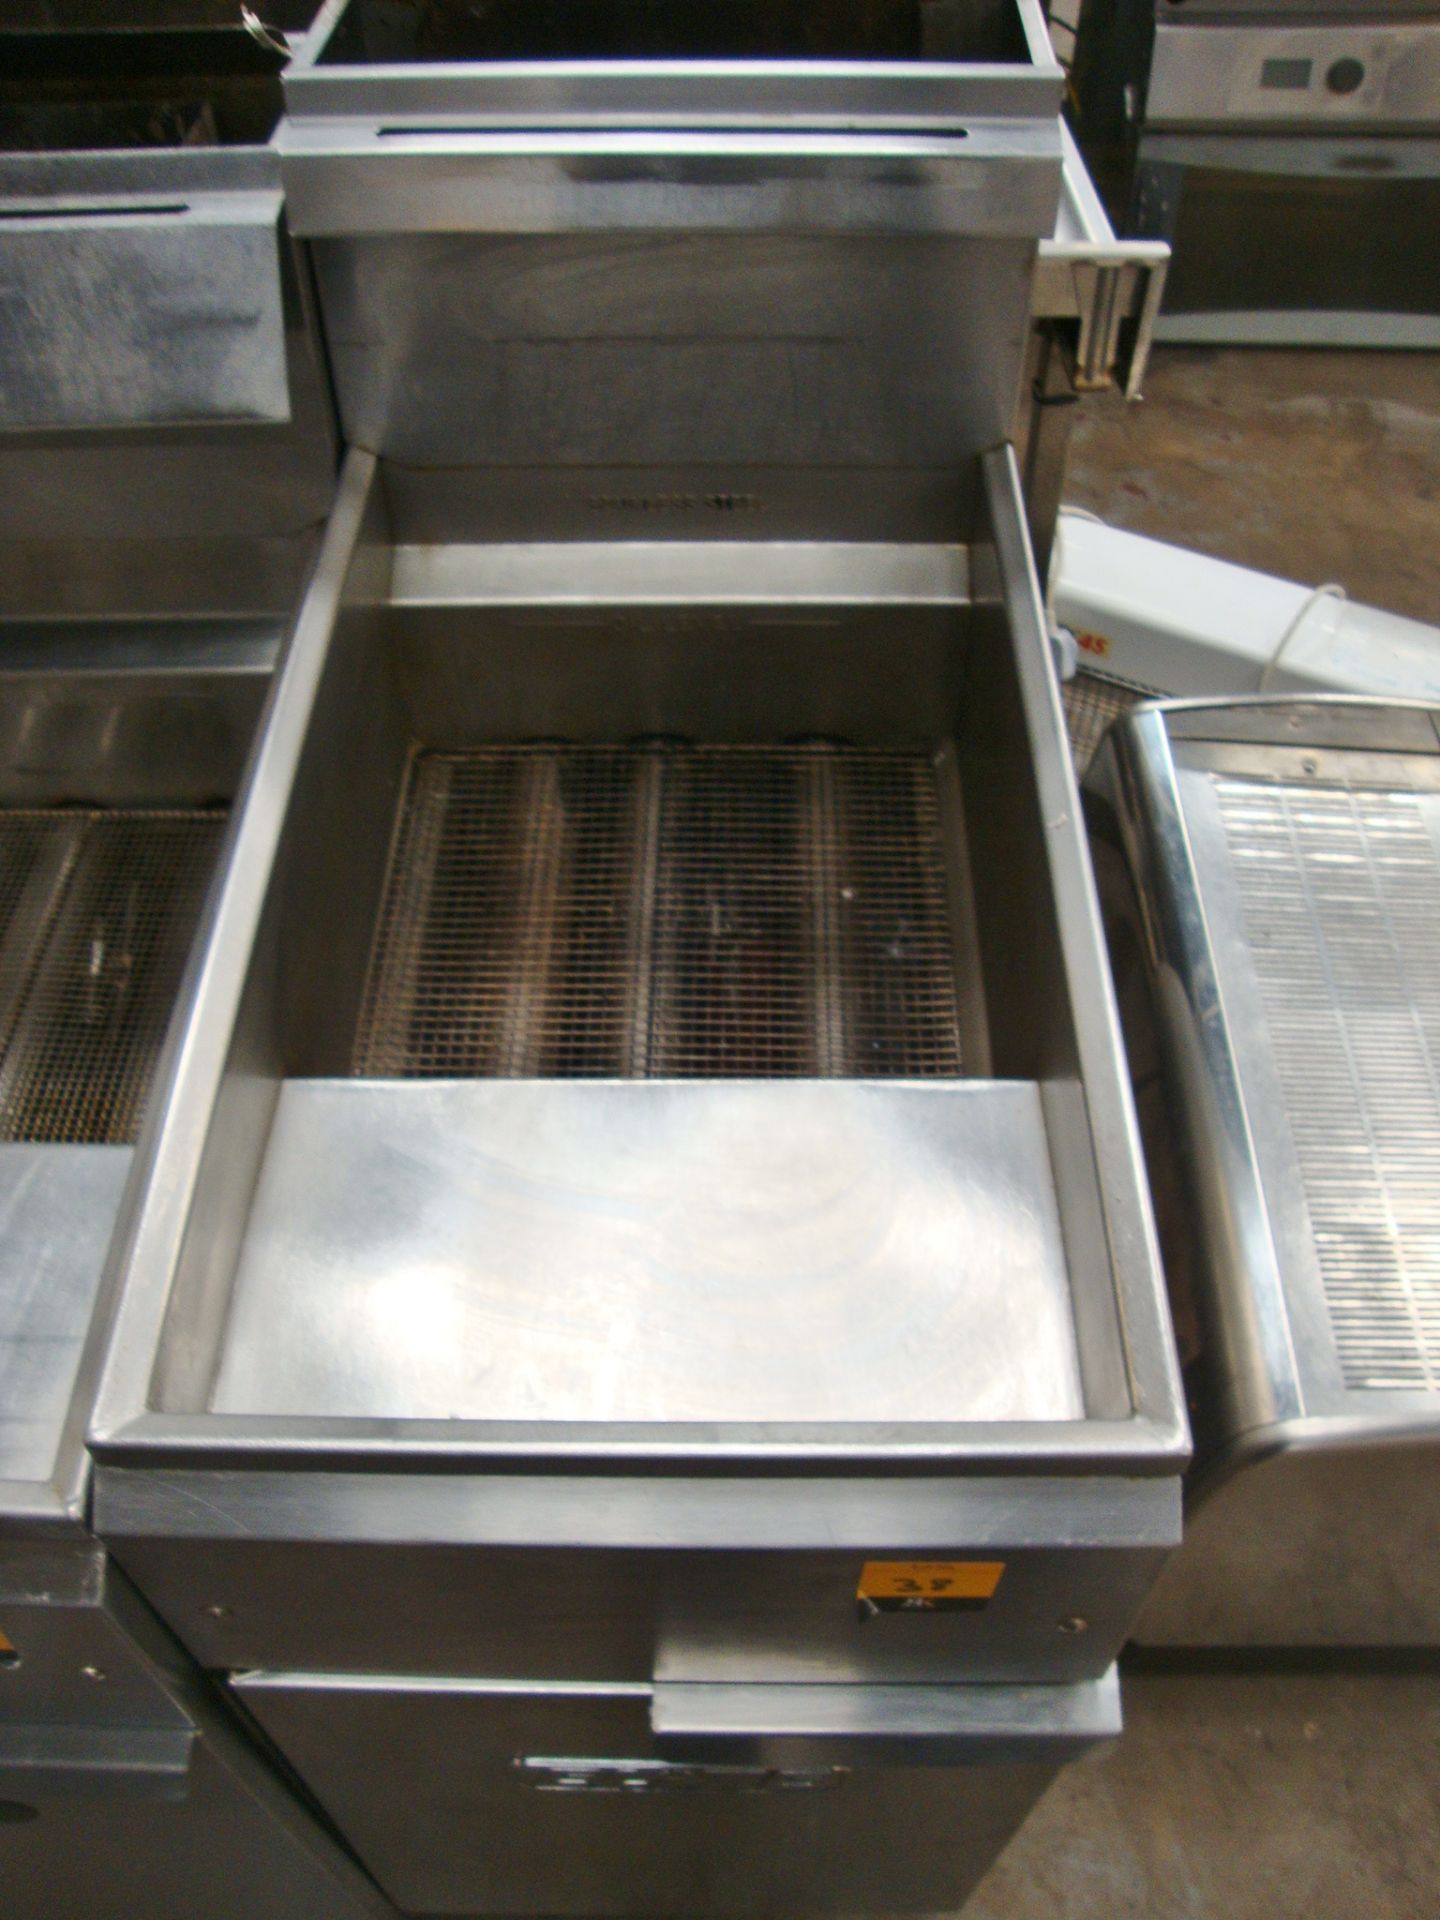 Elite stainless steel floorstanding deep fat fryer - Image 3 of 3